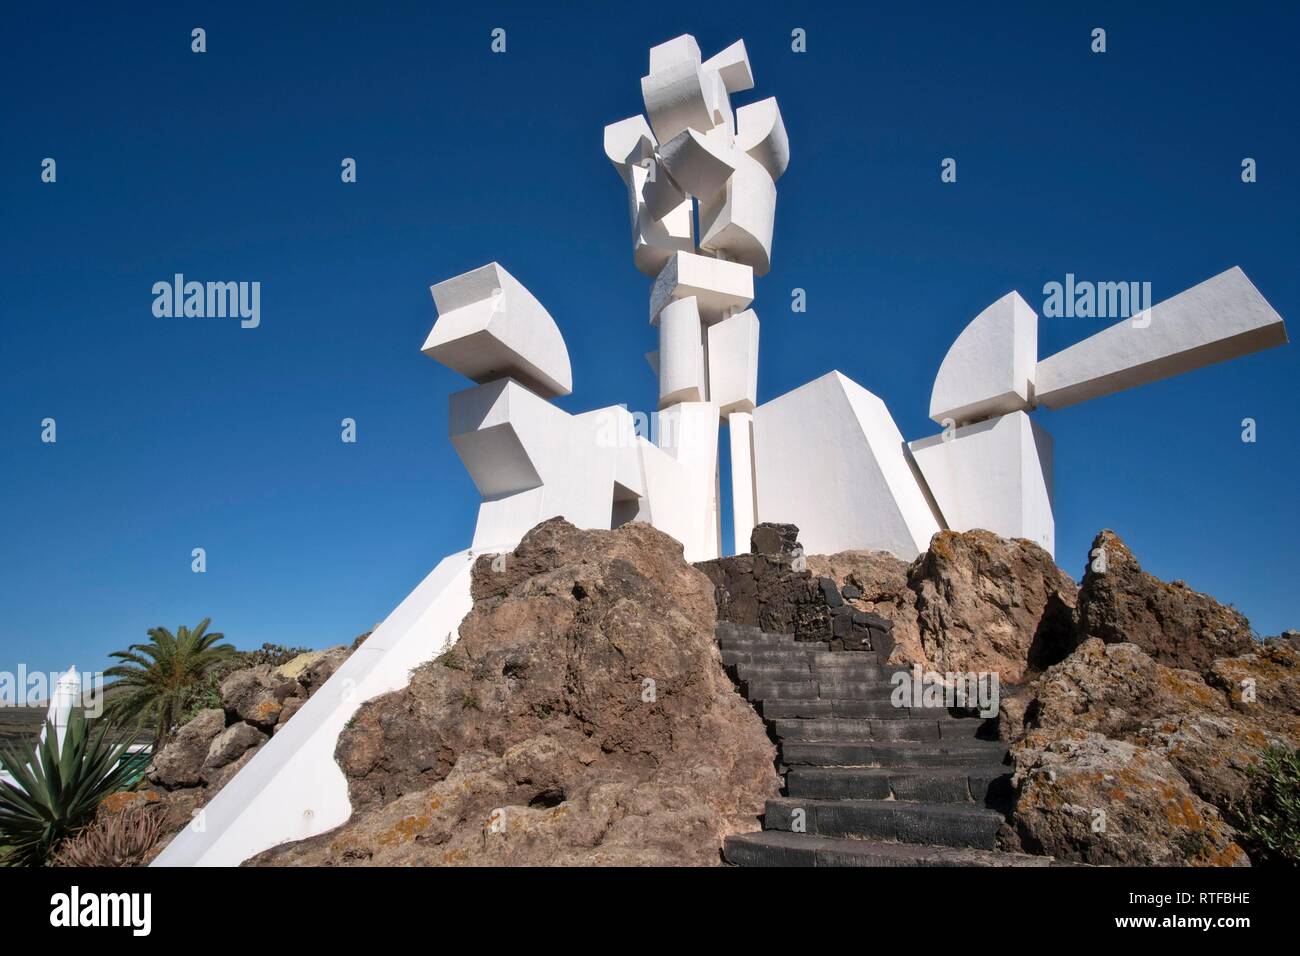 Monumento al Campesino sculpture par l'artiste César Manrique, Playa Blanca, Lanzarote, Espagne Banque D'Images